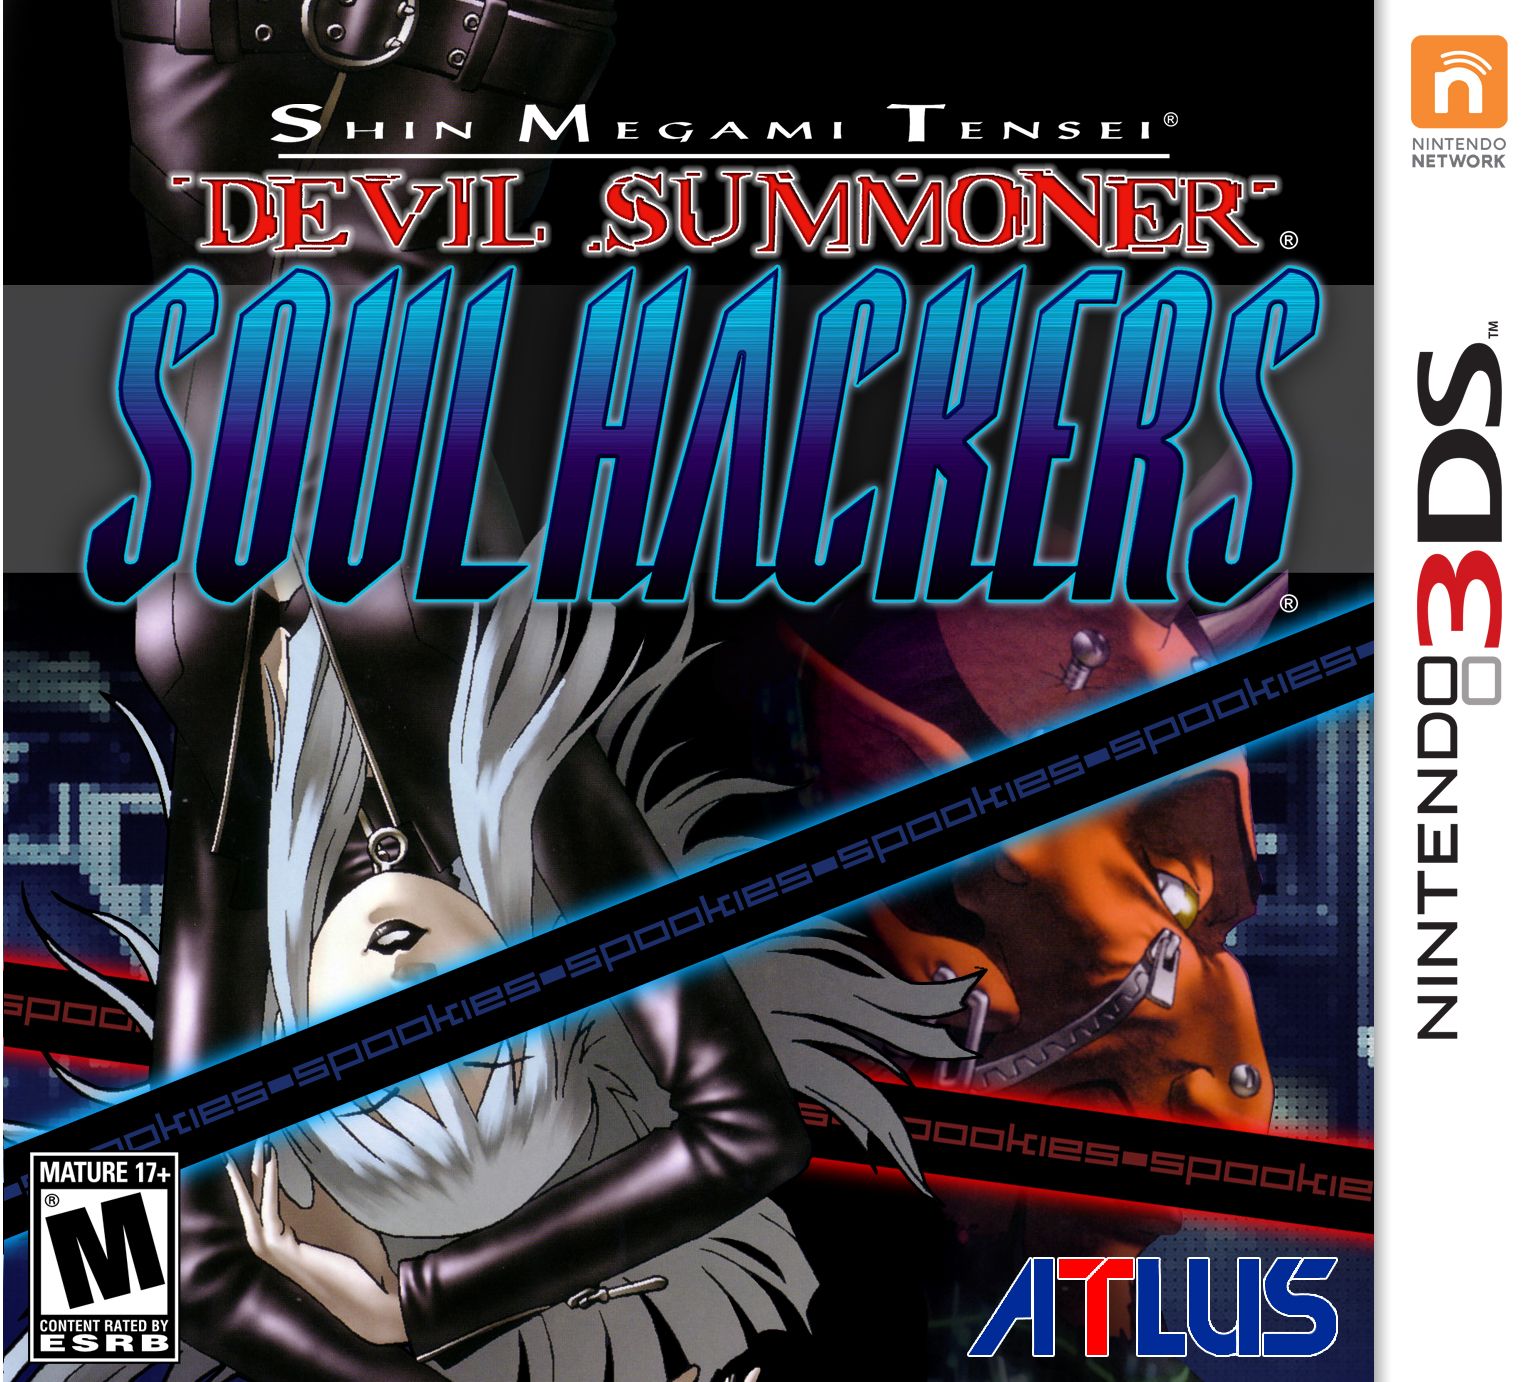 Review – Shin Megami Tensei Devil Summoner Soul Hackers